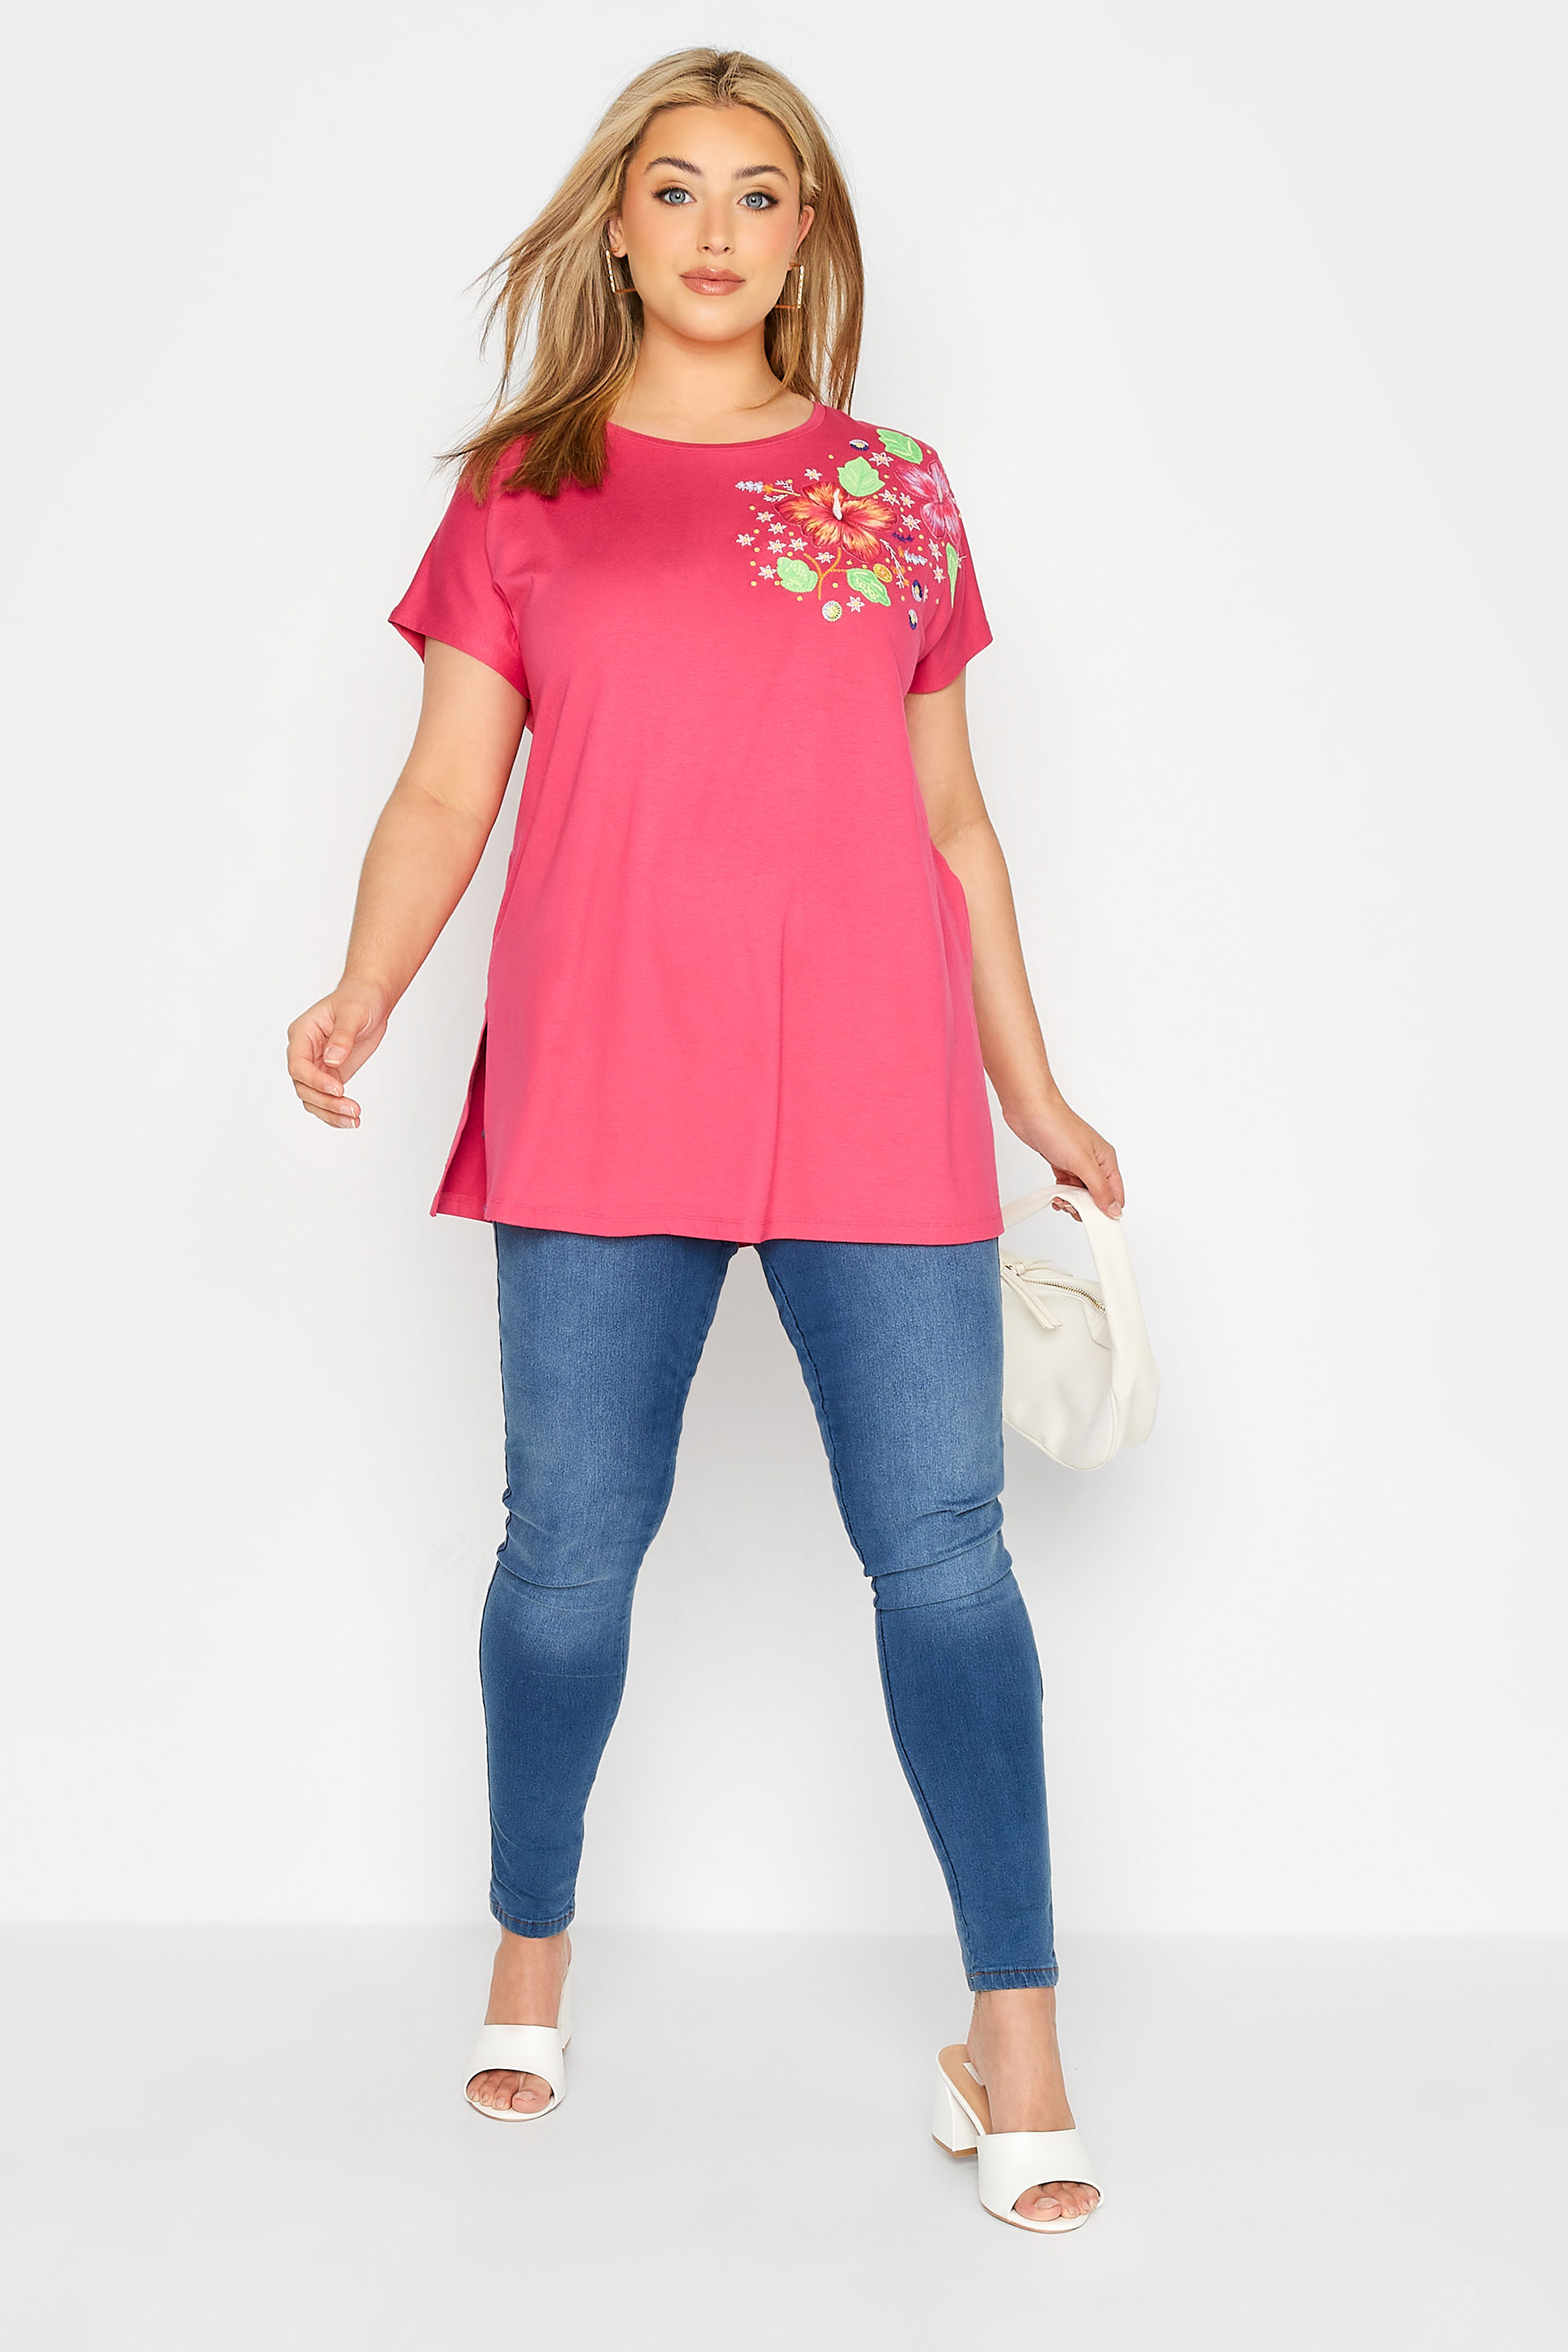 Grande taille  Tops Grande taille  T-Shirts | T-Shirt Rose Manches Courtes en Floral - DG46294